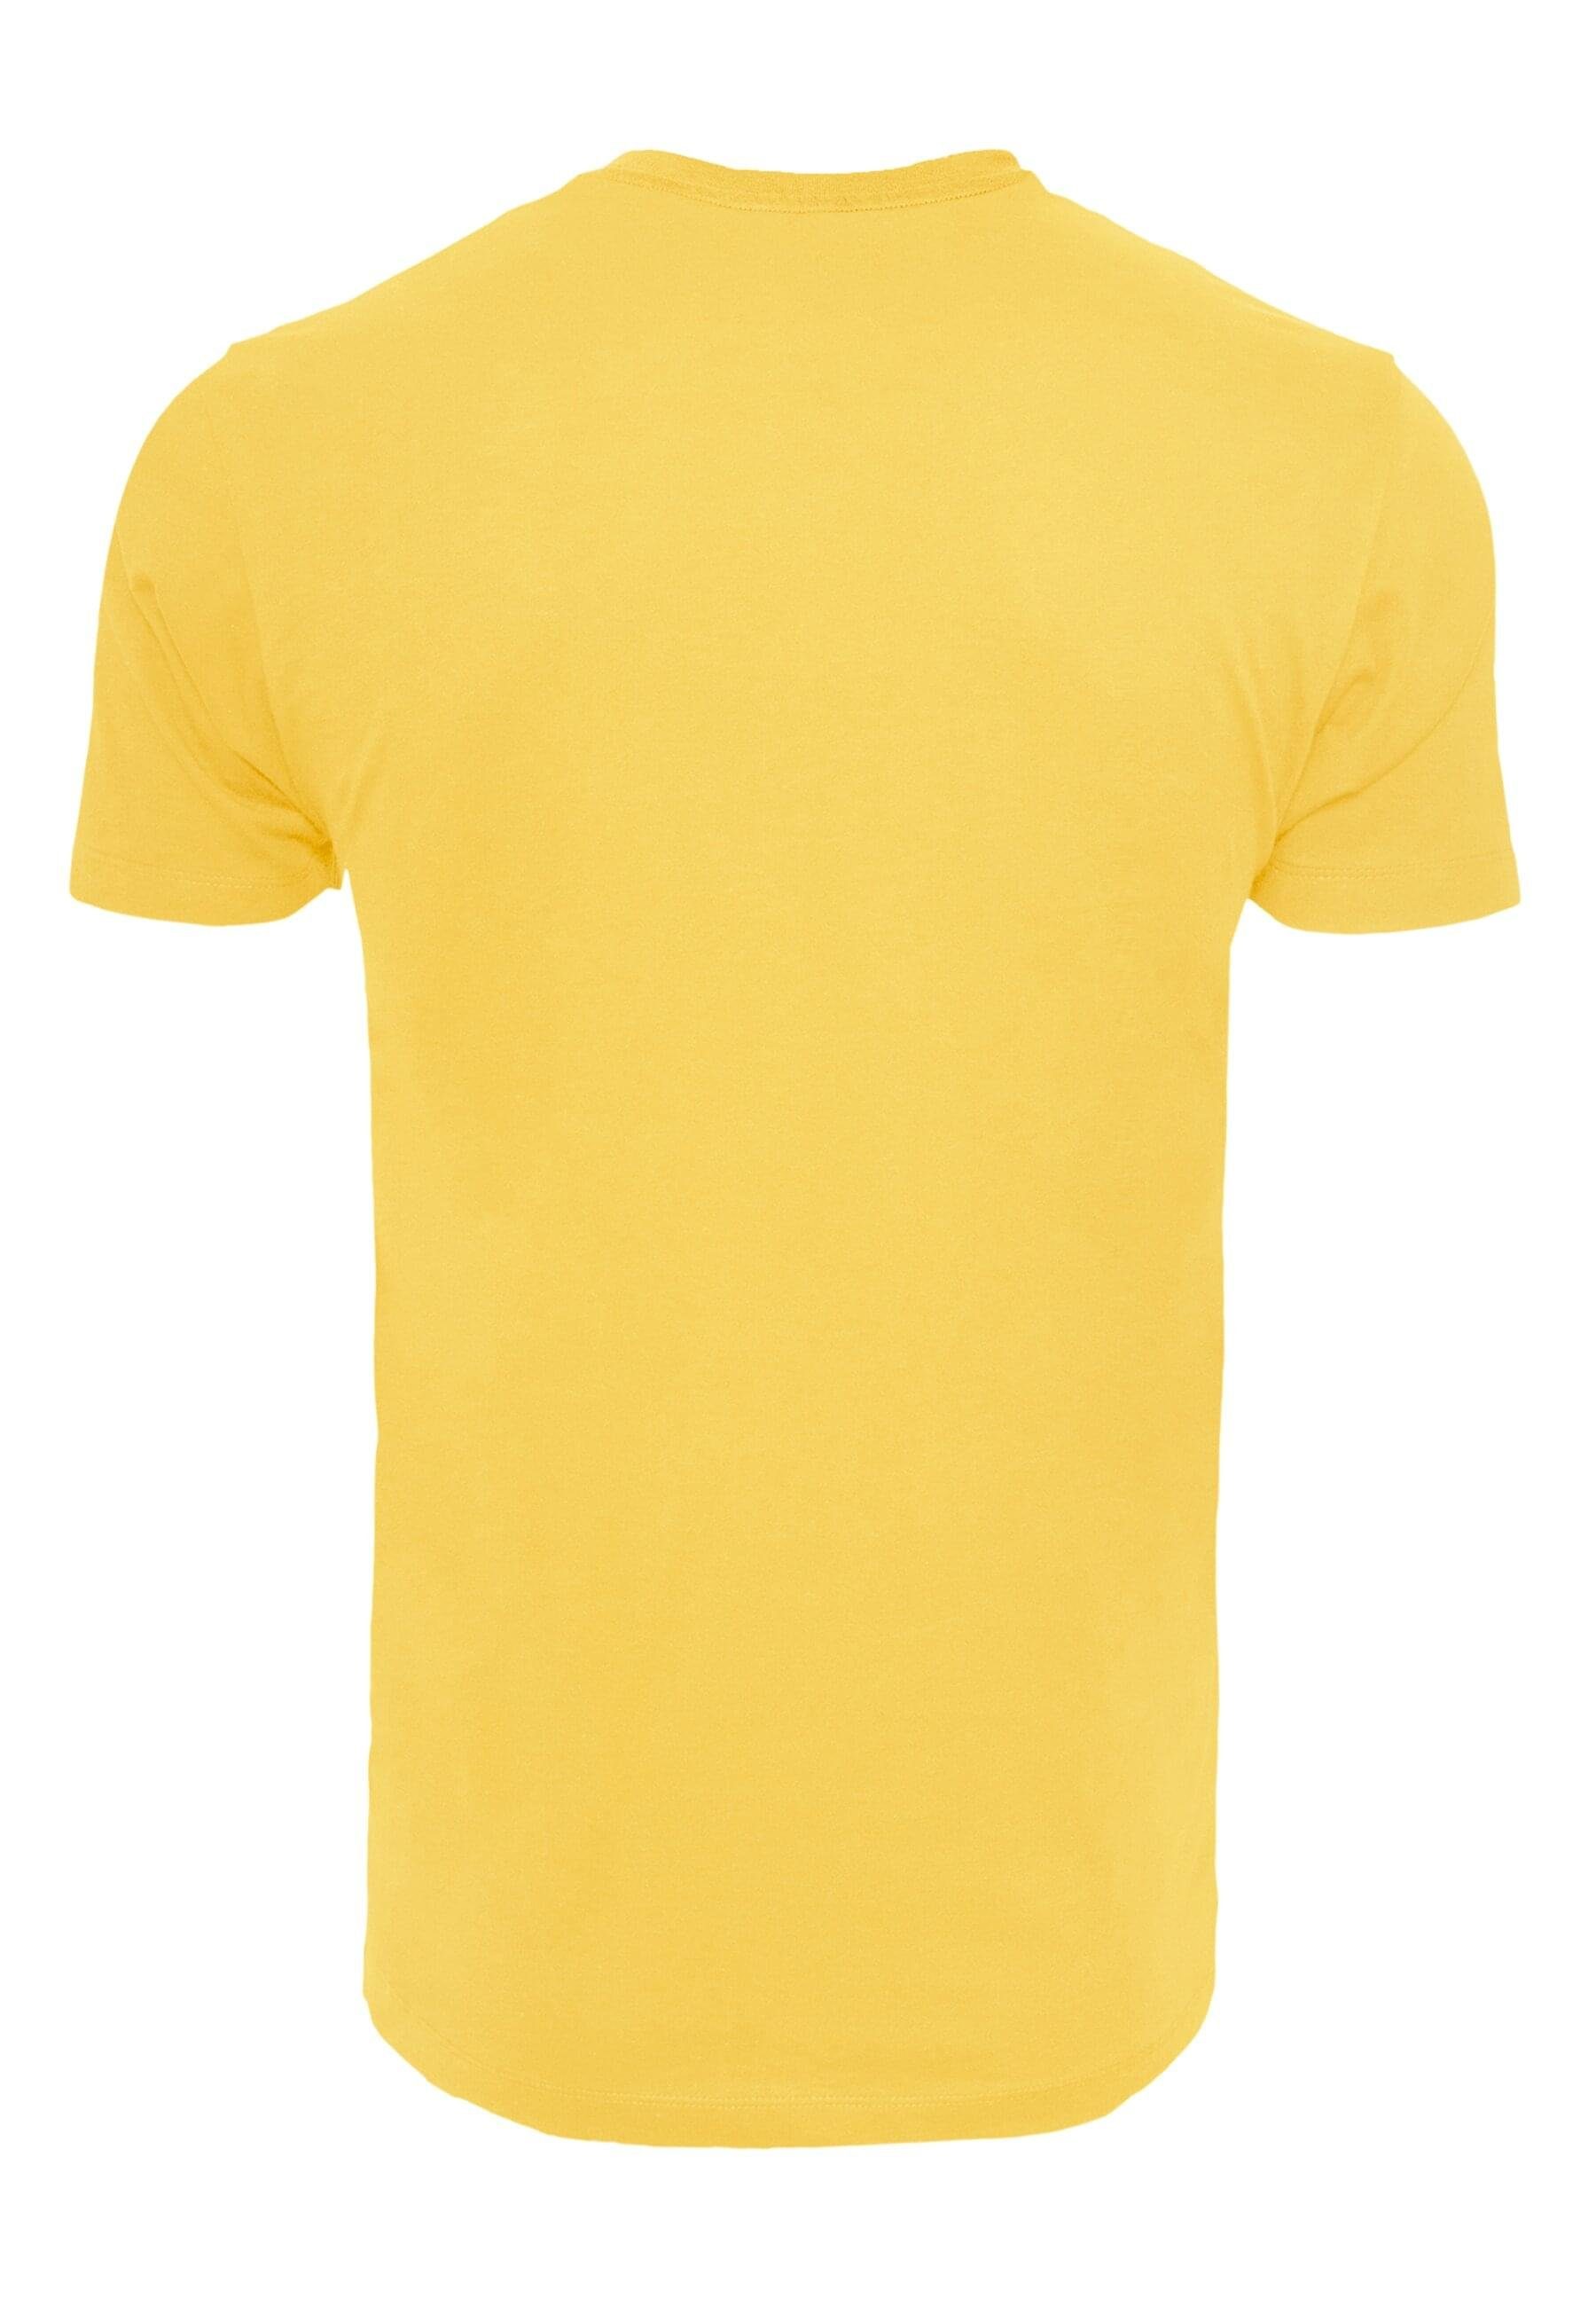 Merchcode T-Shirt Herren F (no taxiyellow Qatar heart) K T-Shirt Neck (1-tlg) Round